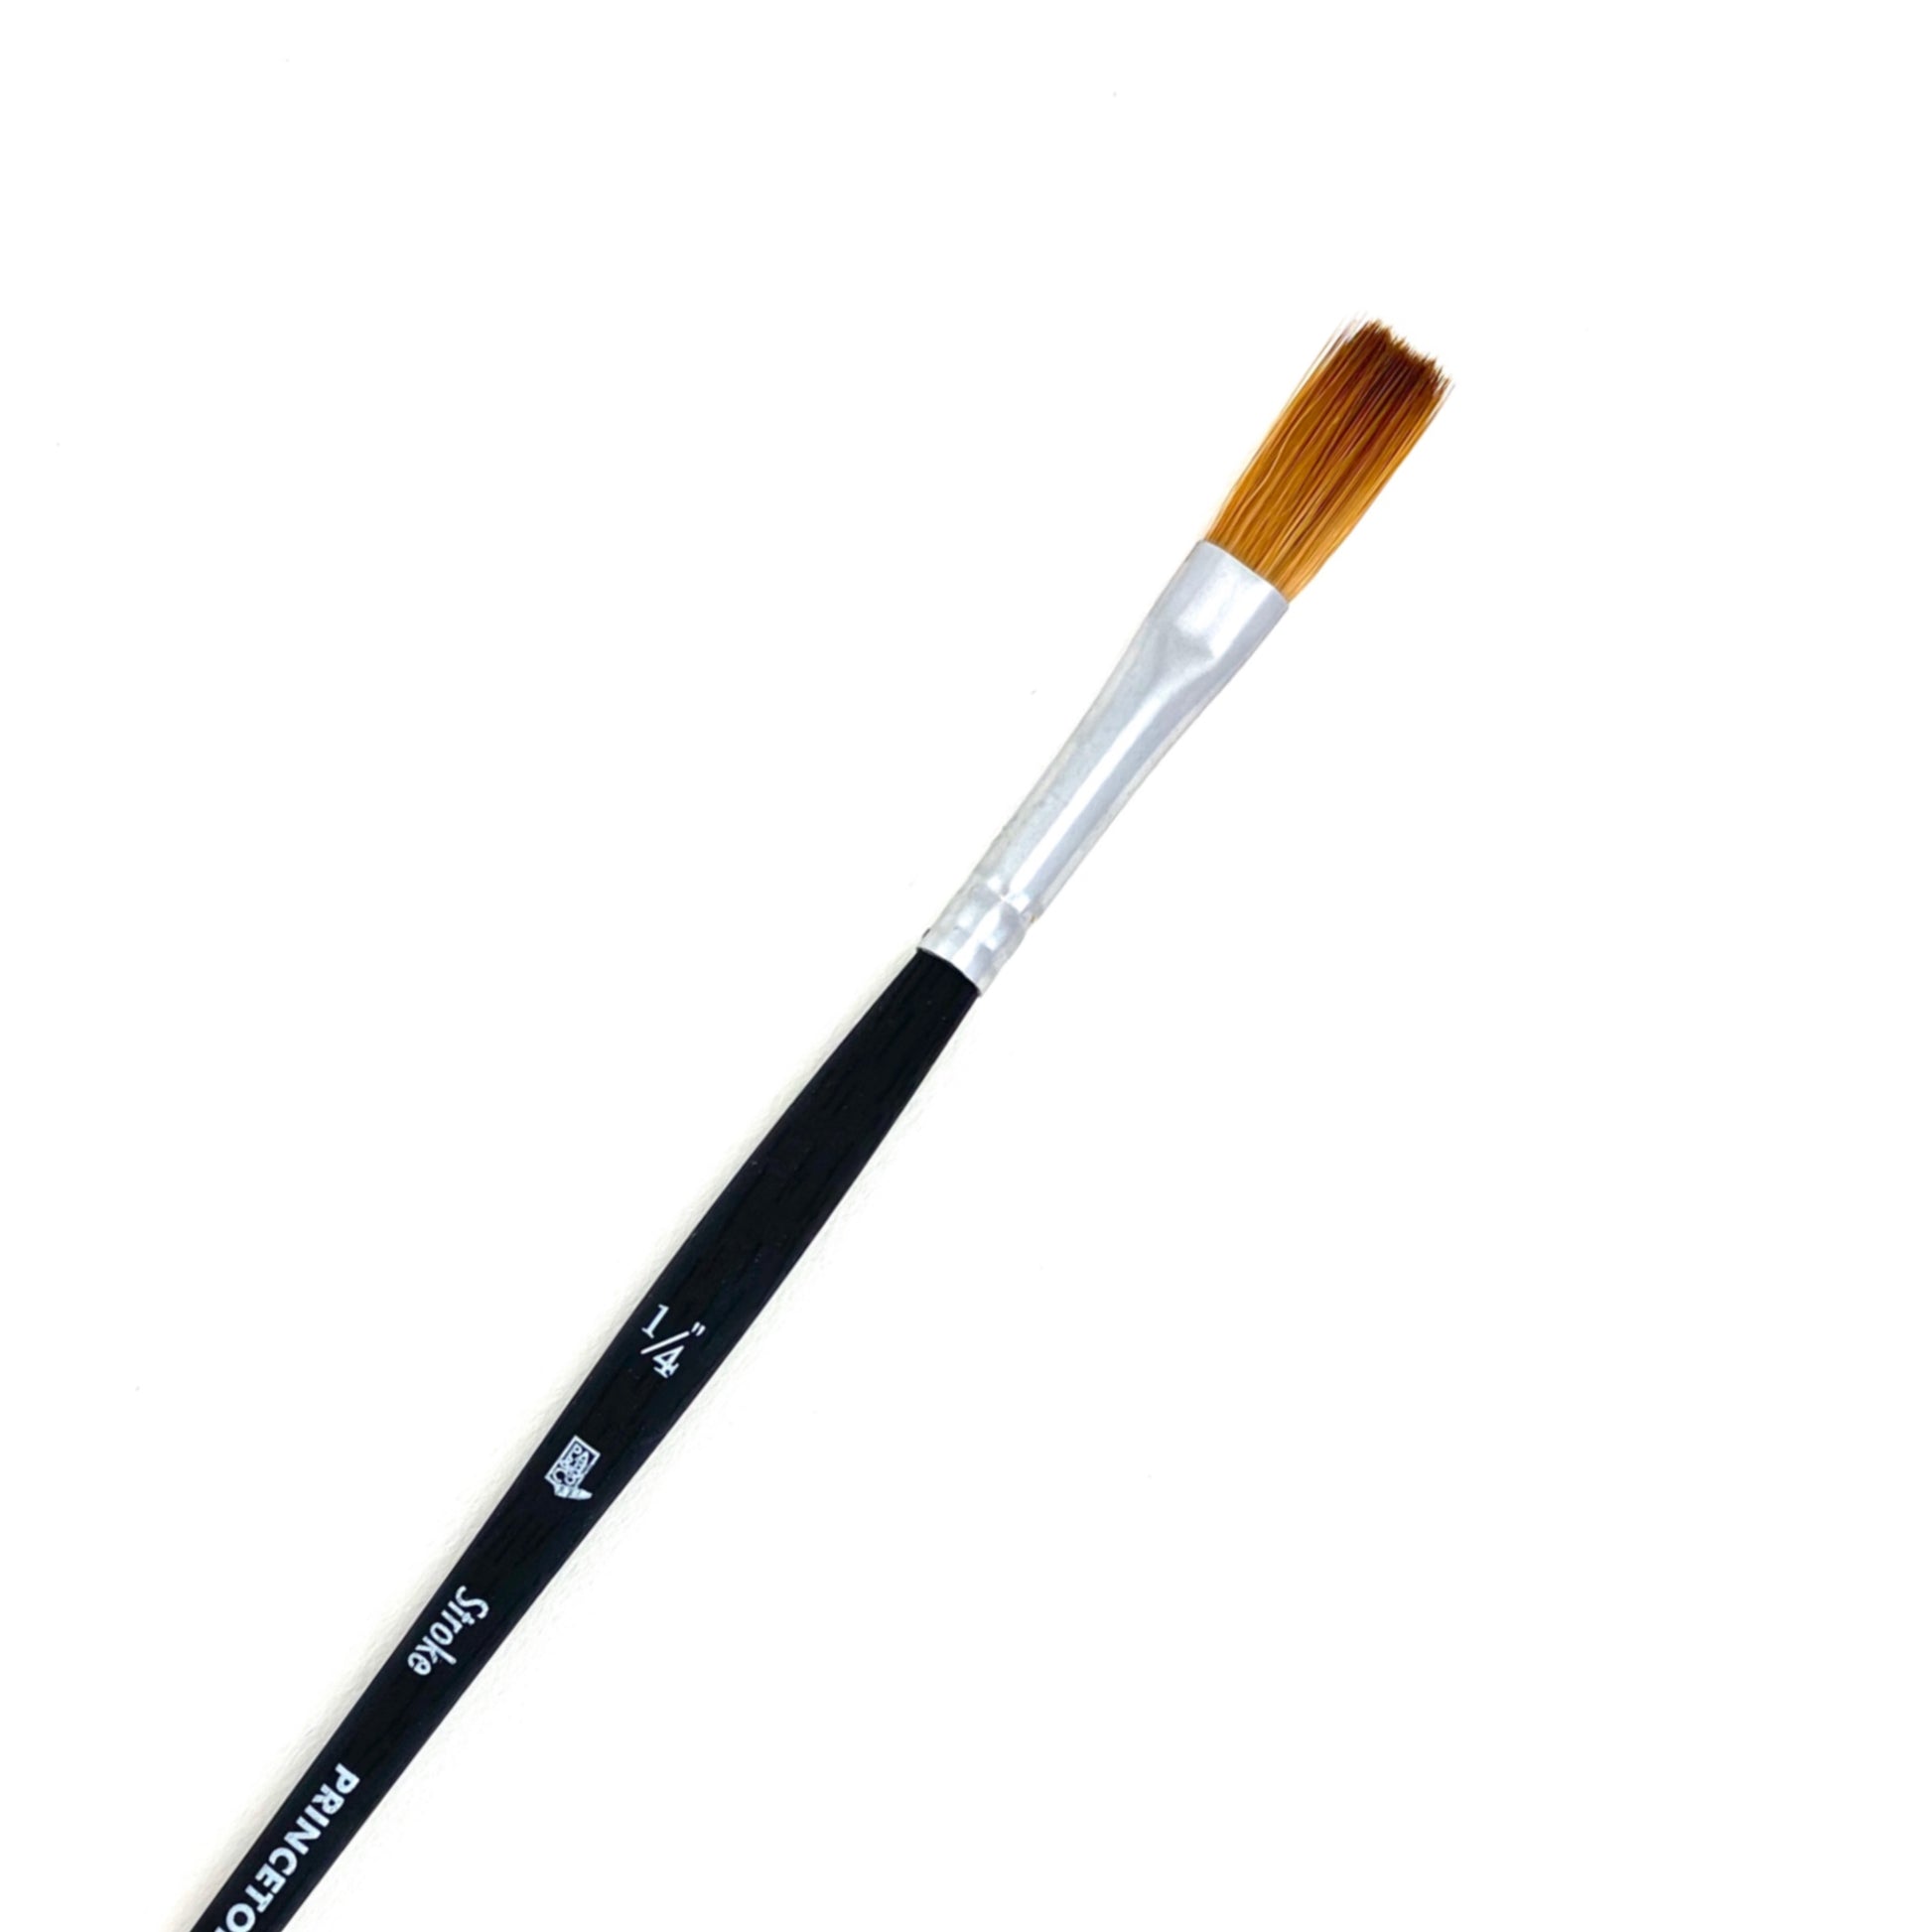 Winsor & Newton Series 7 Kolinsky Sable - Watercolor Brushes - Artist  Brushes & Tools